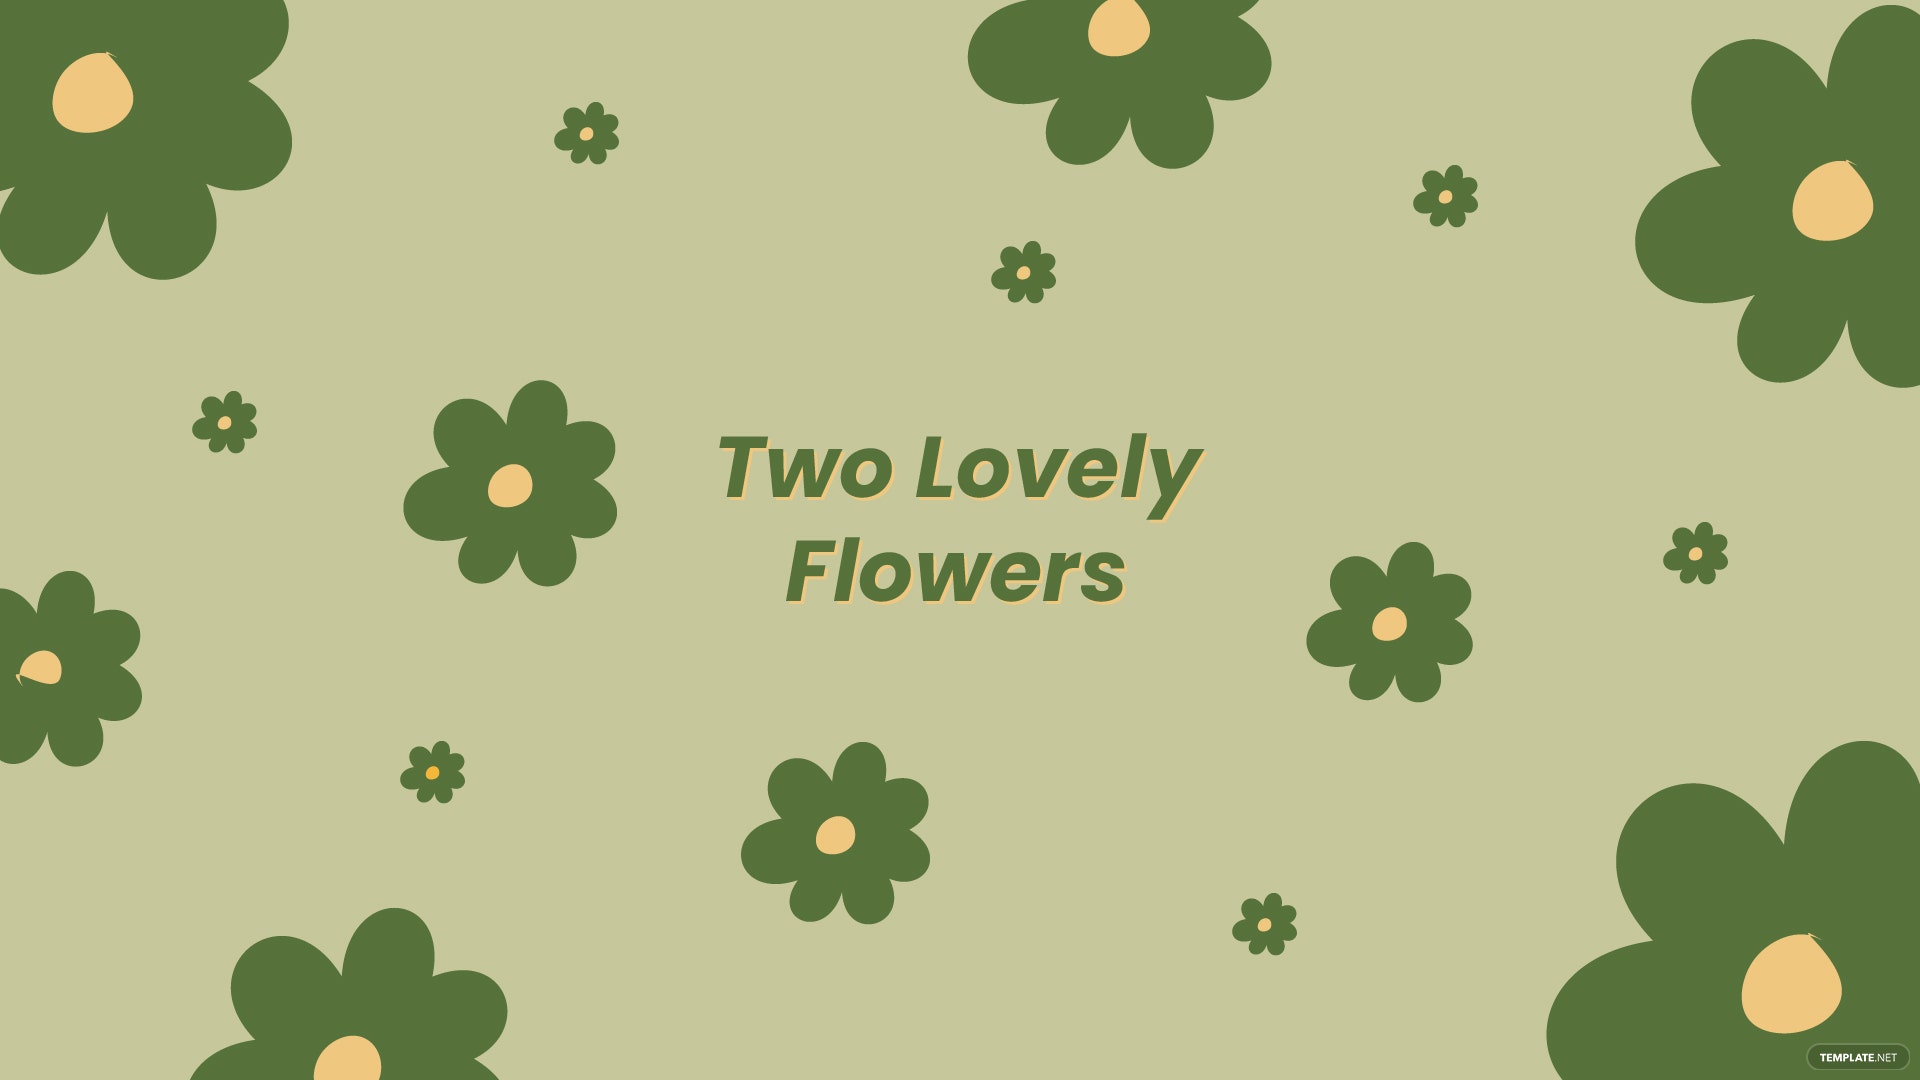 Free Green Flower Wallpaper, Illustrator, JPG, PNG, SVG